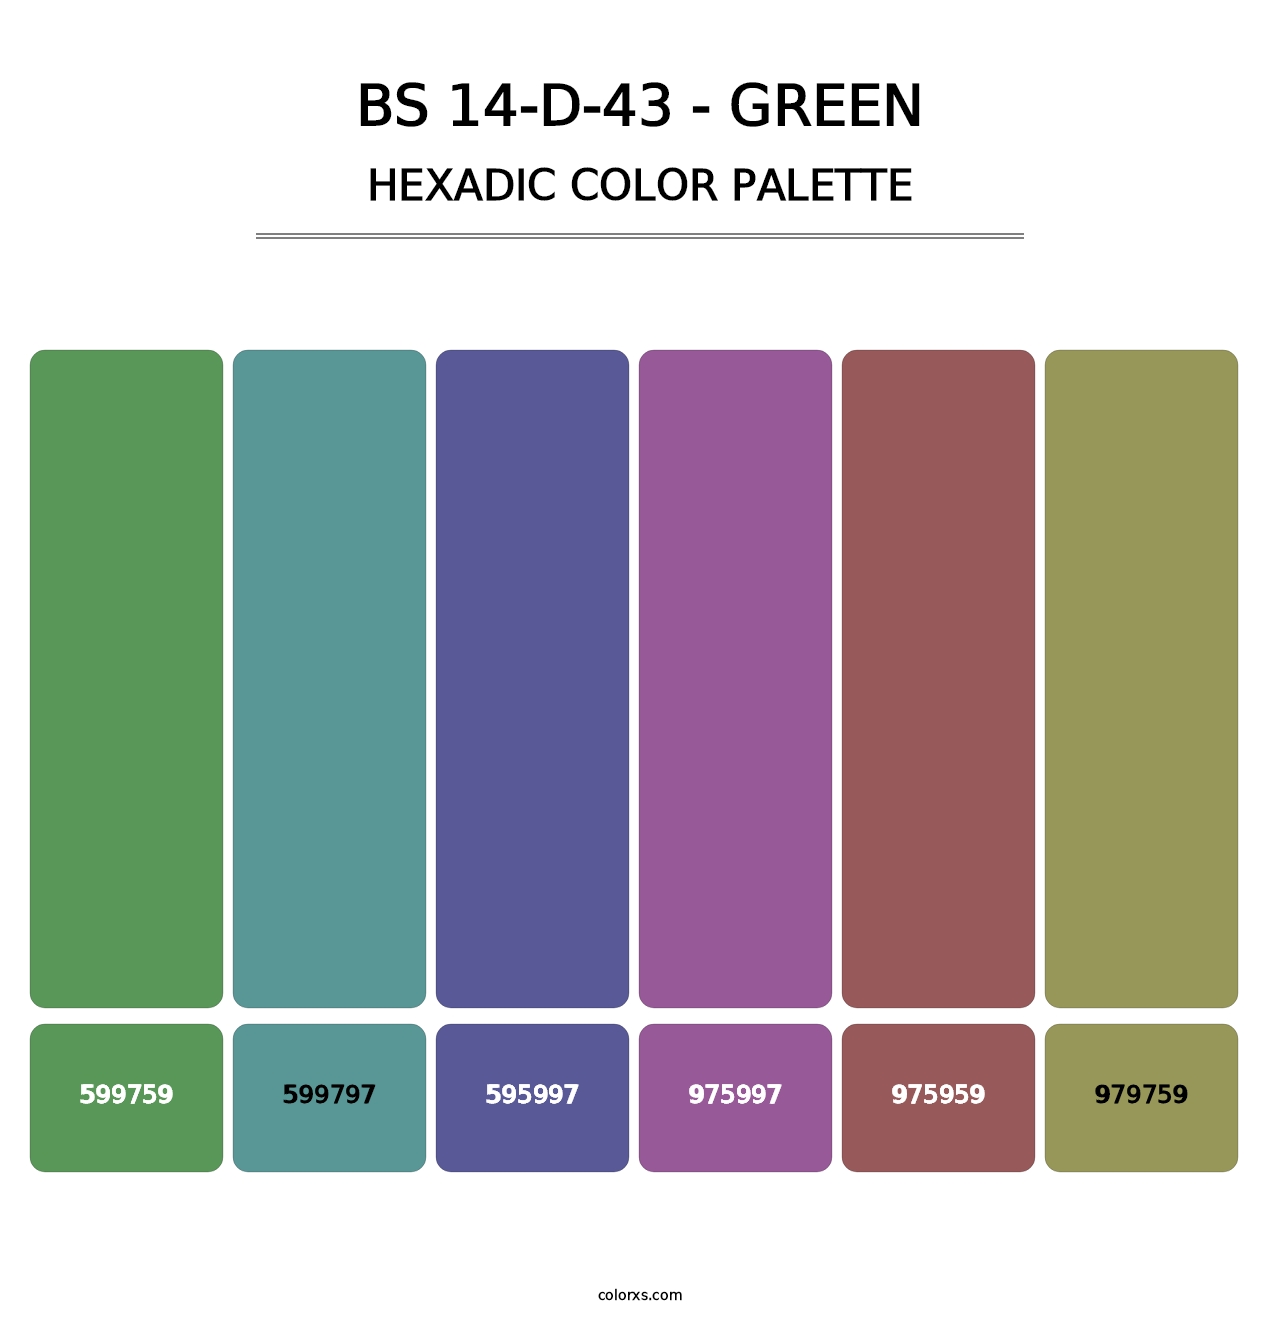 BS 14-D-43 - Green - Hexadic Color Palette